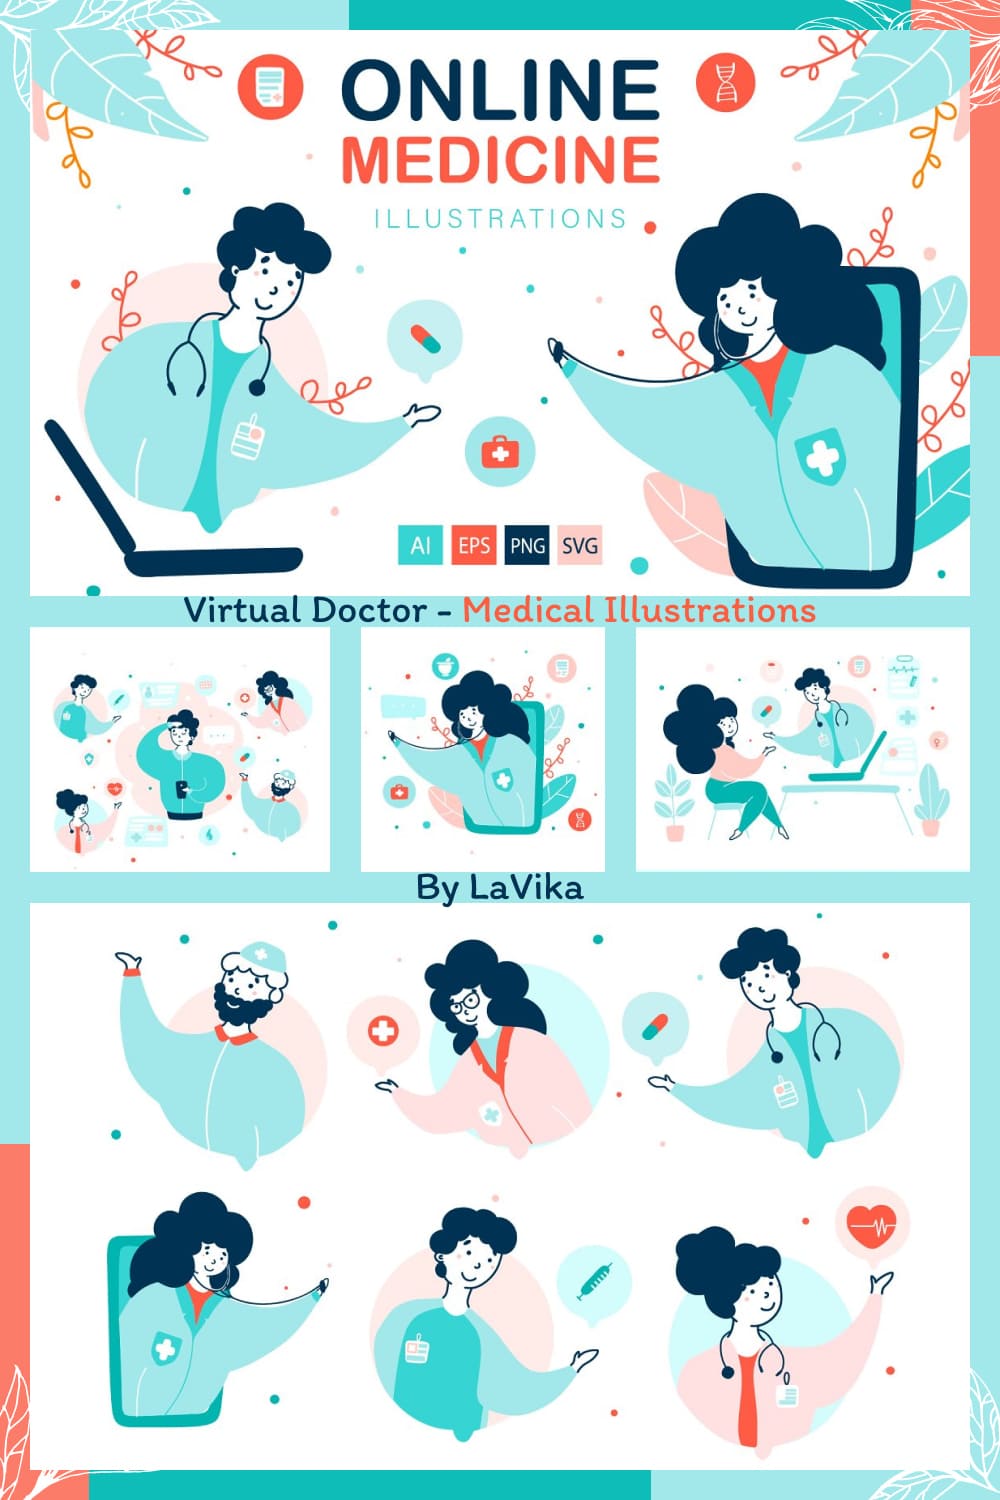 virtual doctor medical illustrations pinterest image.